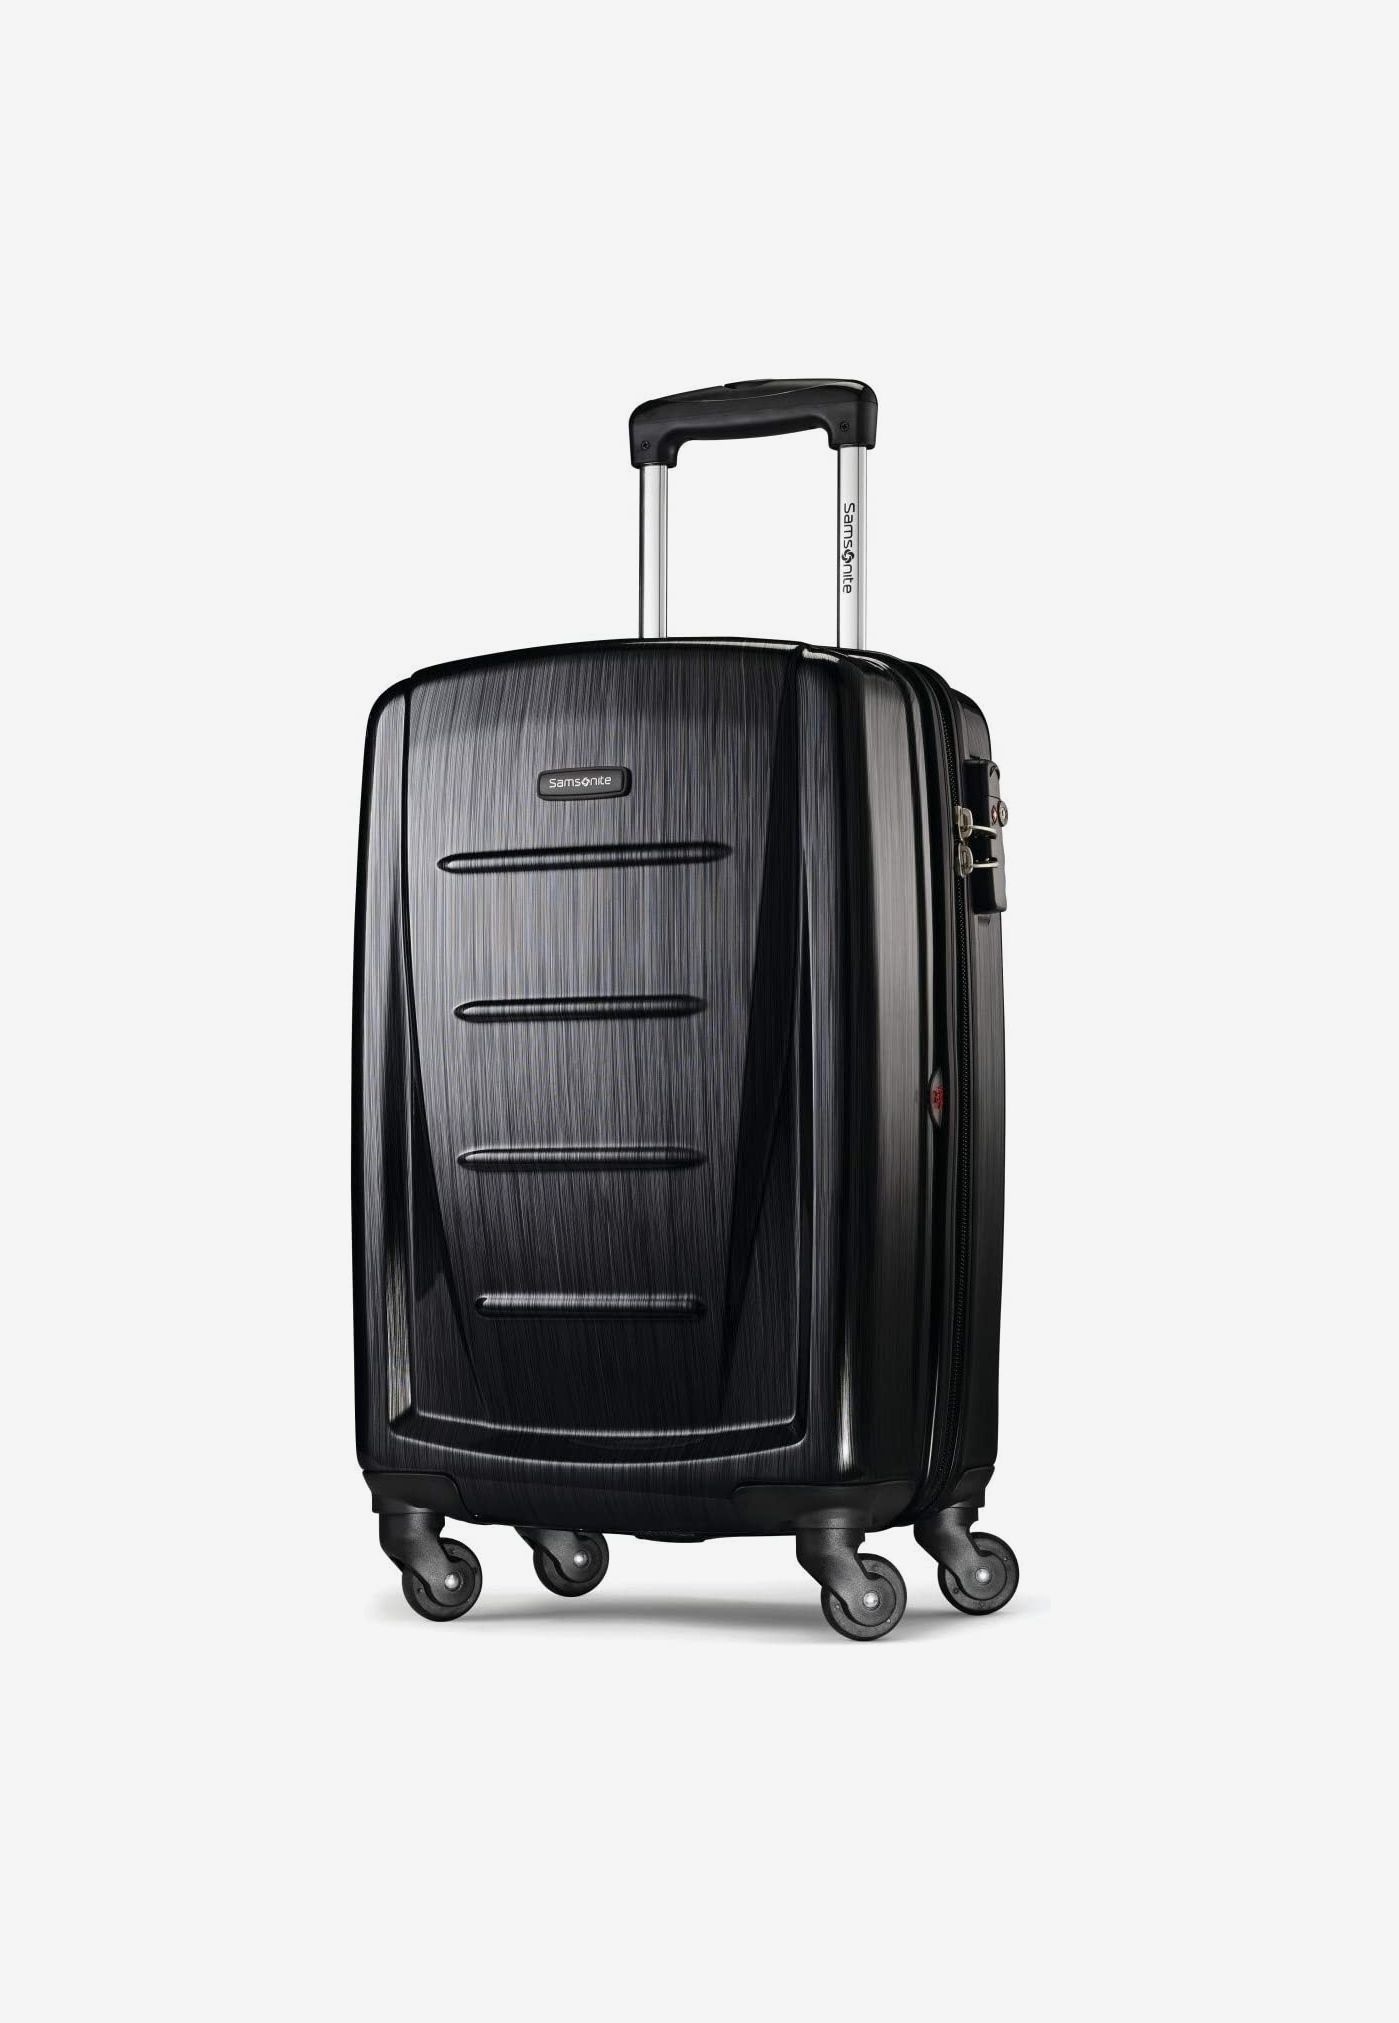 Groot Metropolitan verbannen Samsonite Winfield Carry-on 20-Inch Suitcase Sale 2023 | The Strategist